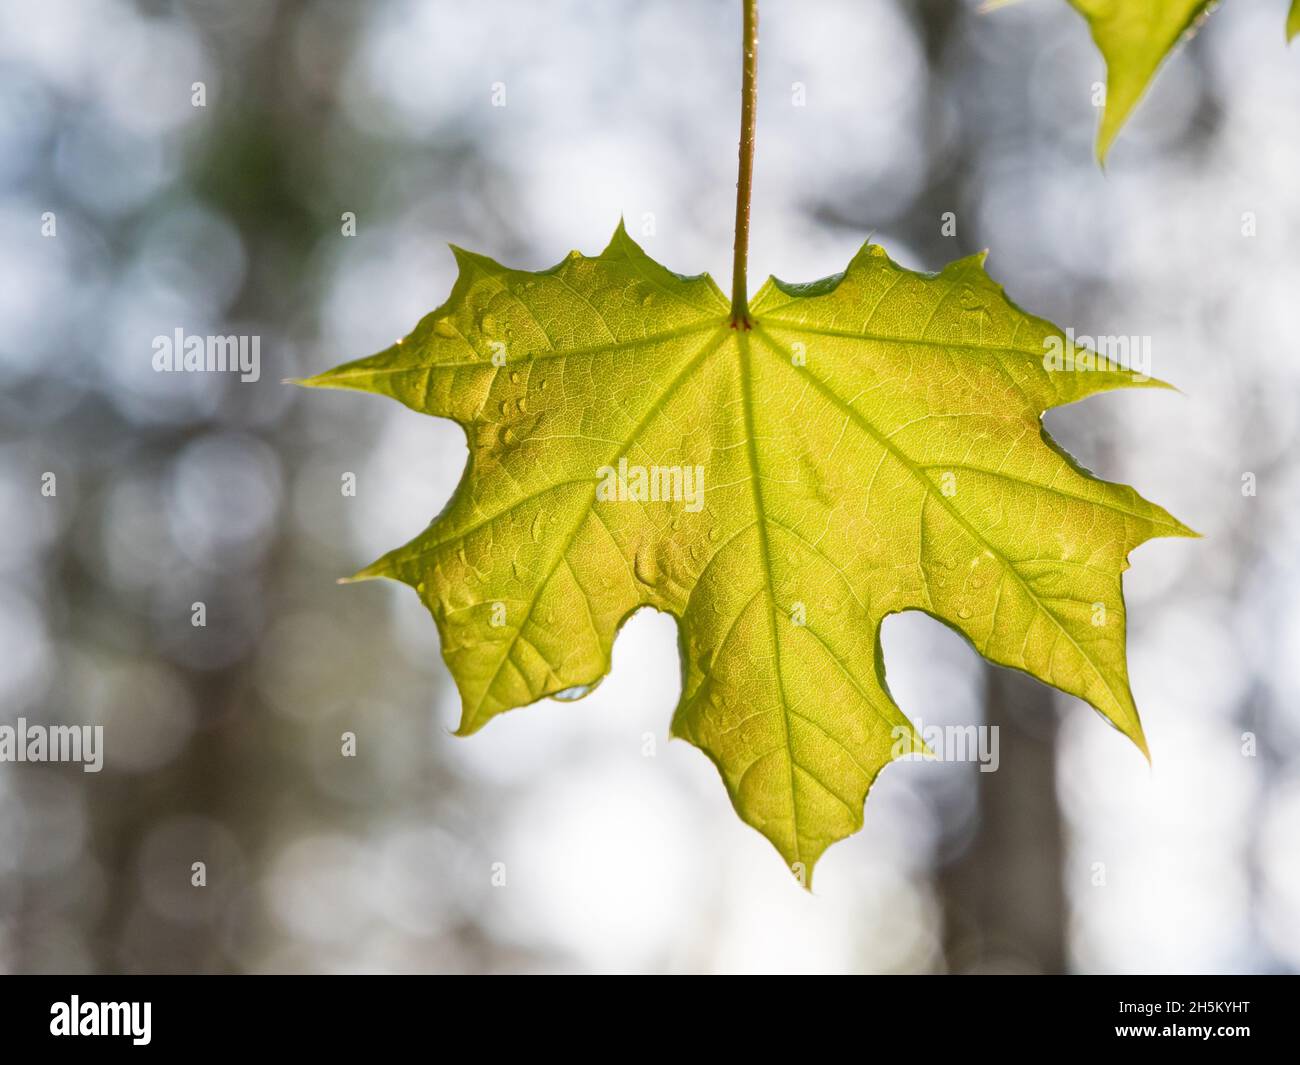 Norway maple leaf hanging downwards Stock Photo